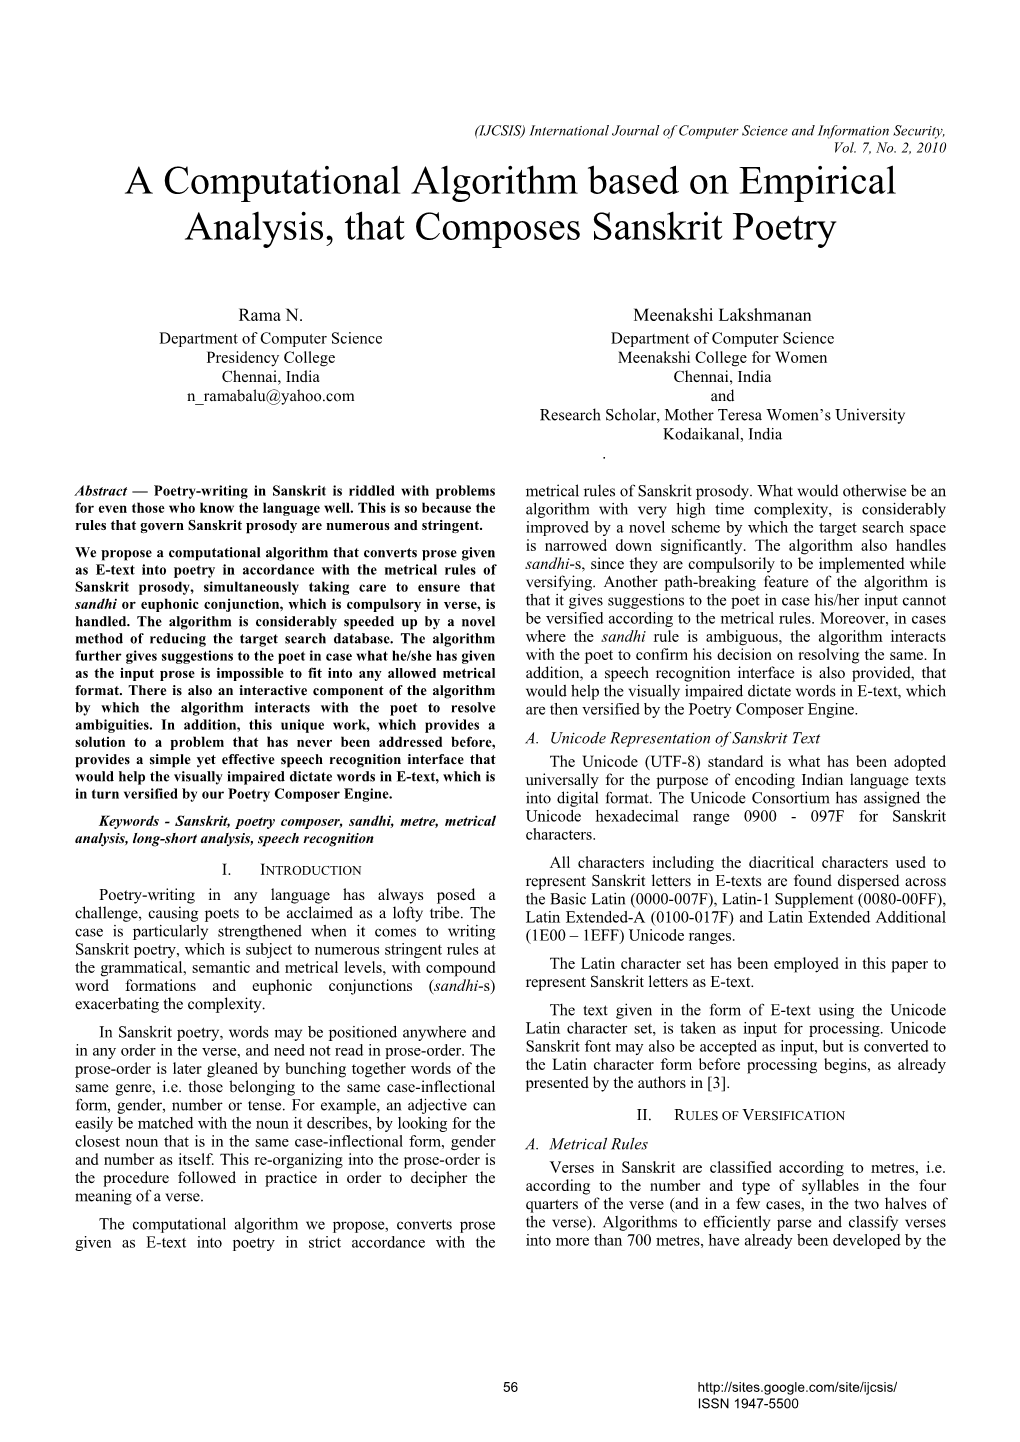 A Computational Algorithm Based on Empirical Analysis, That Composes Sanskrit Poetry